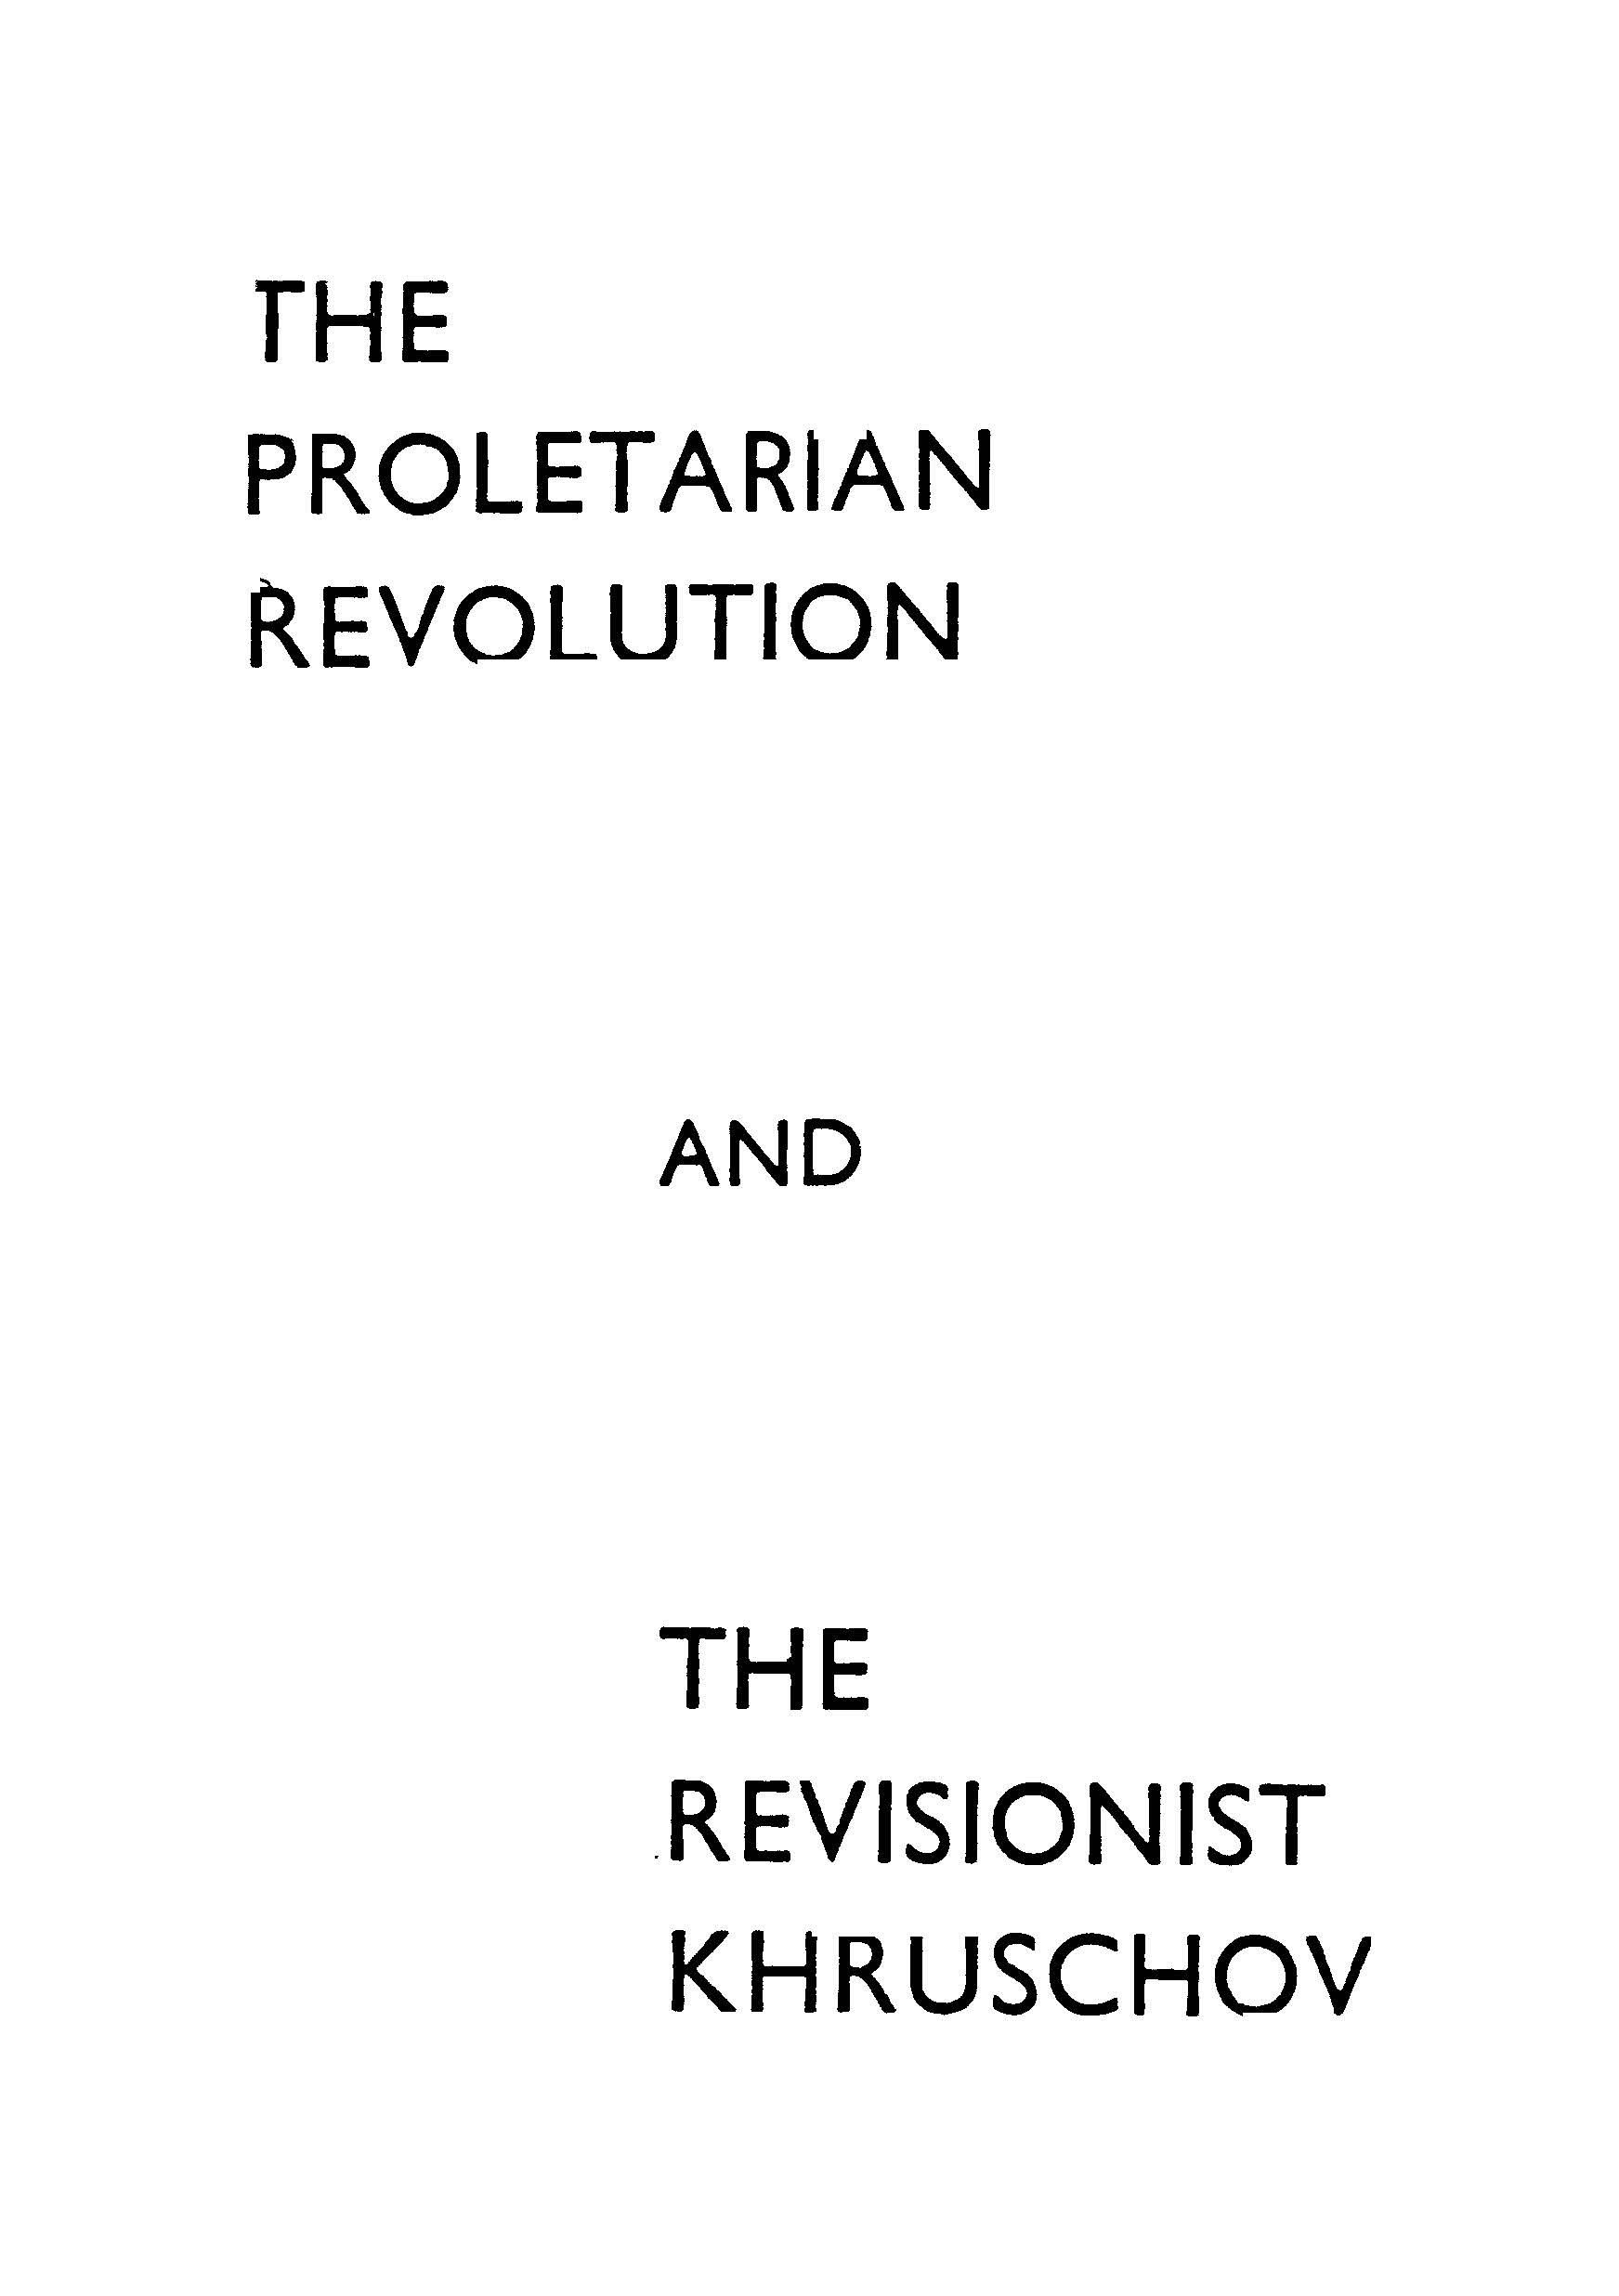 The Proletarian Revolution & The Revisionist Khruschov